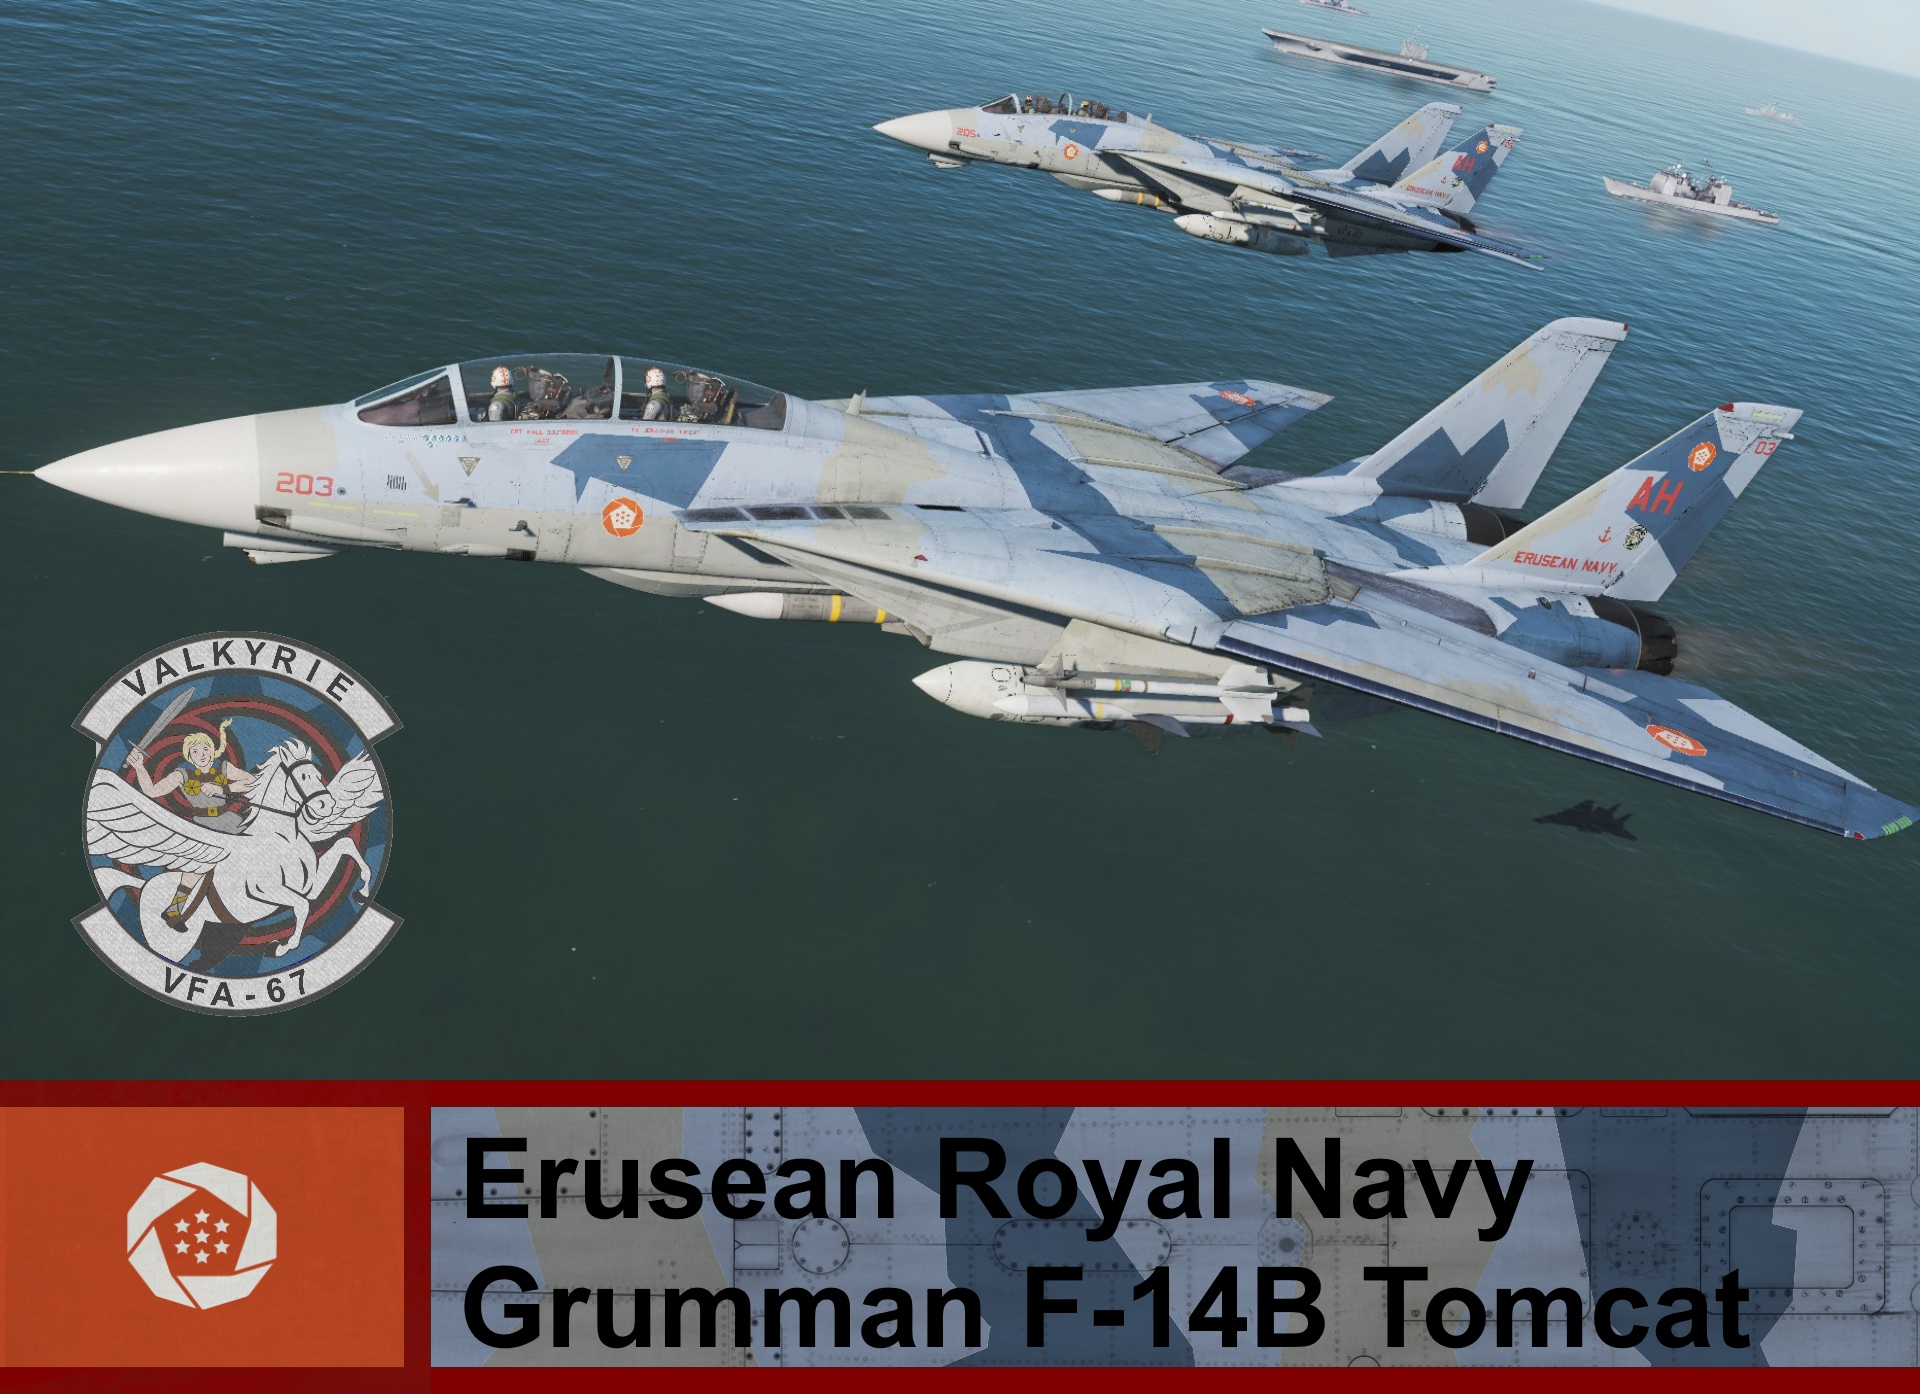 Erusean Royal Navy F-14B tomcat - Ace Combat (VFA-67)